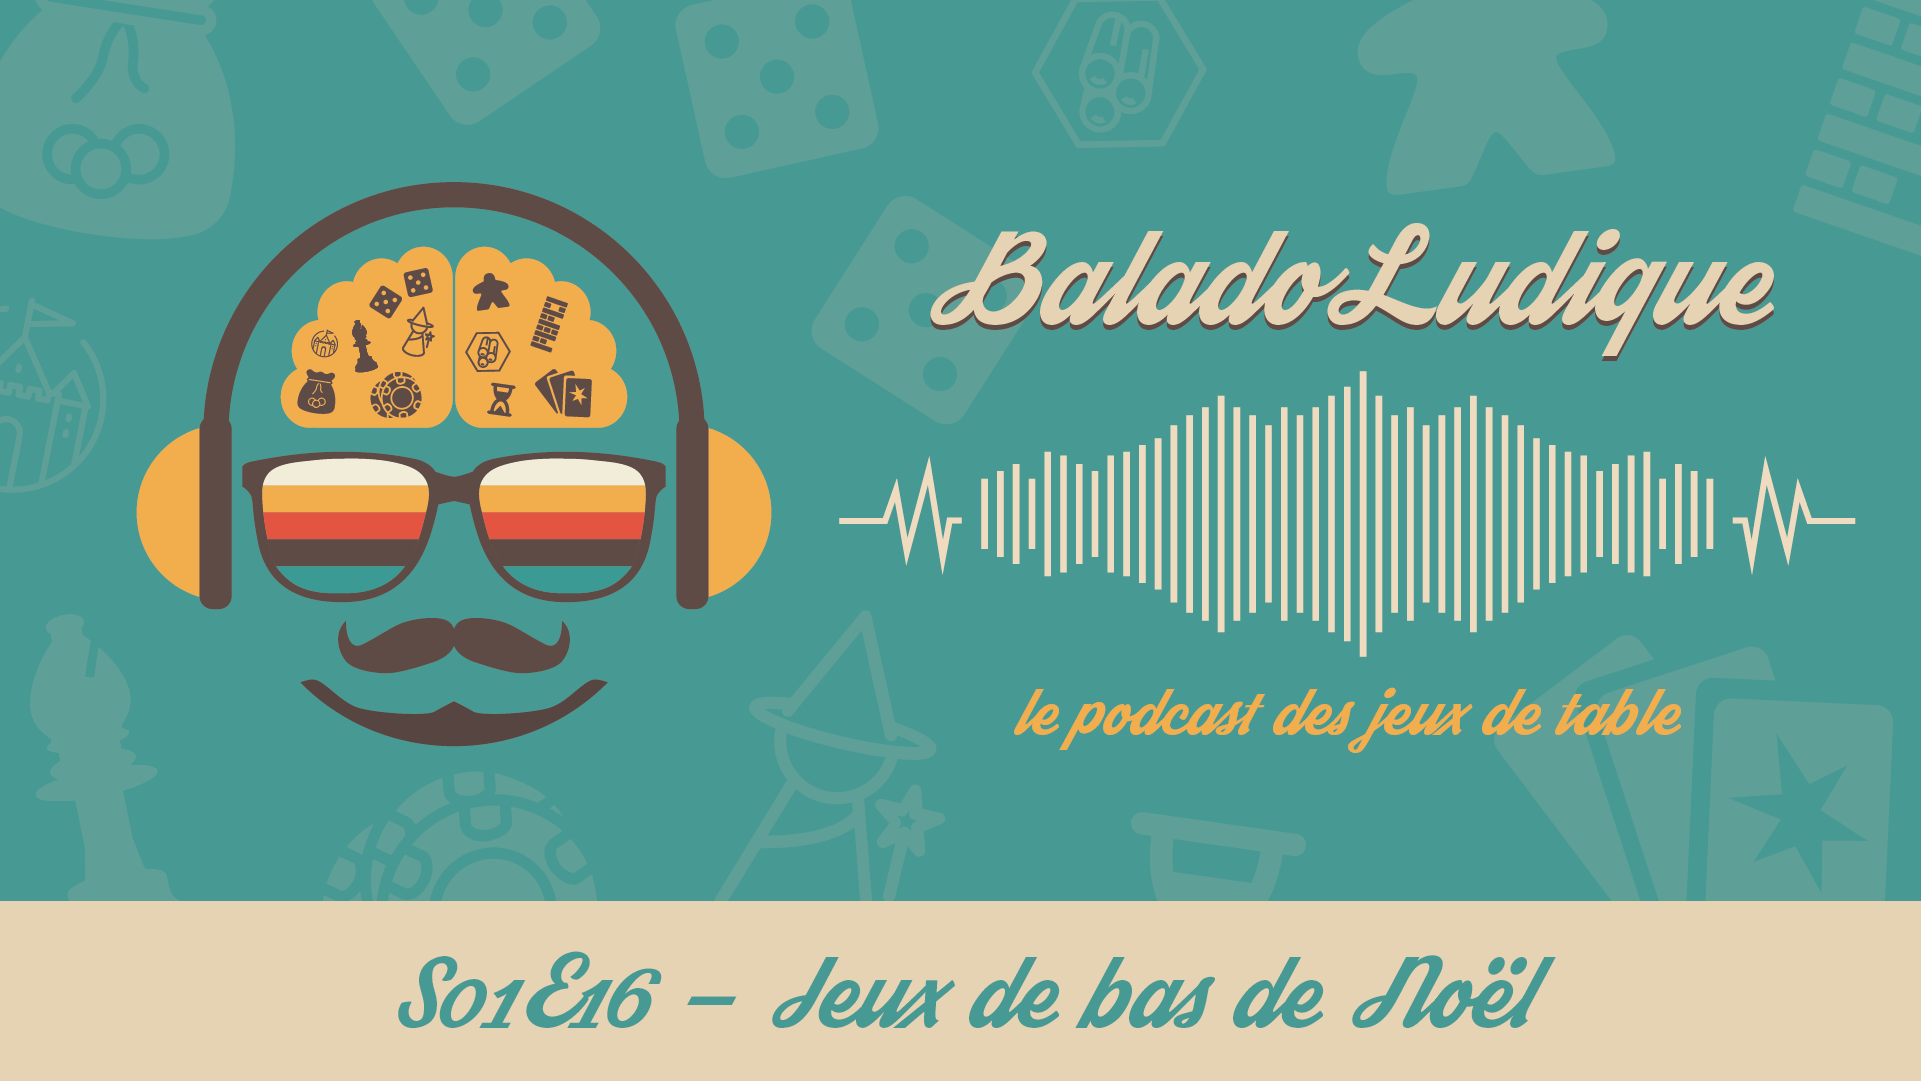 Jeux de bas de Noël - BaladoLudique - s01e16